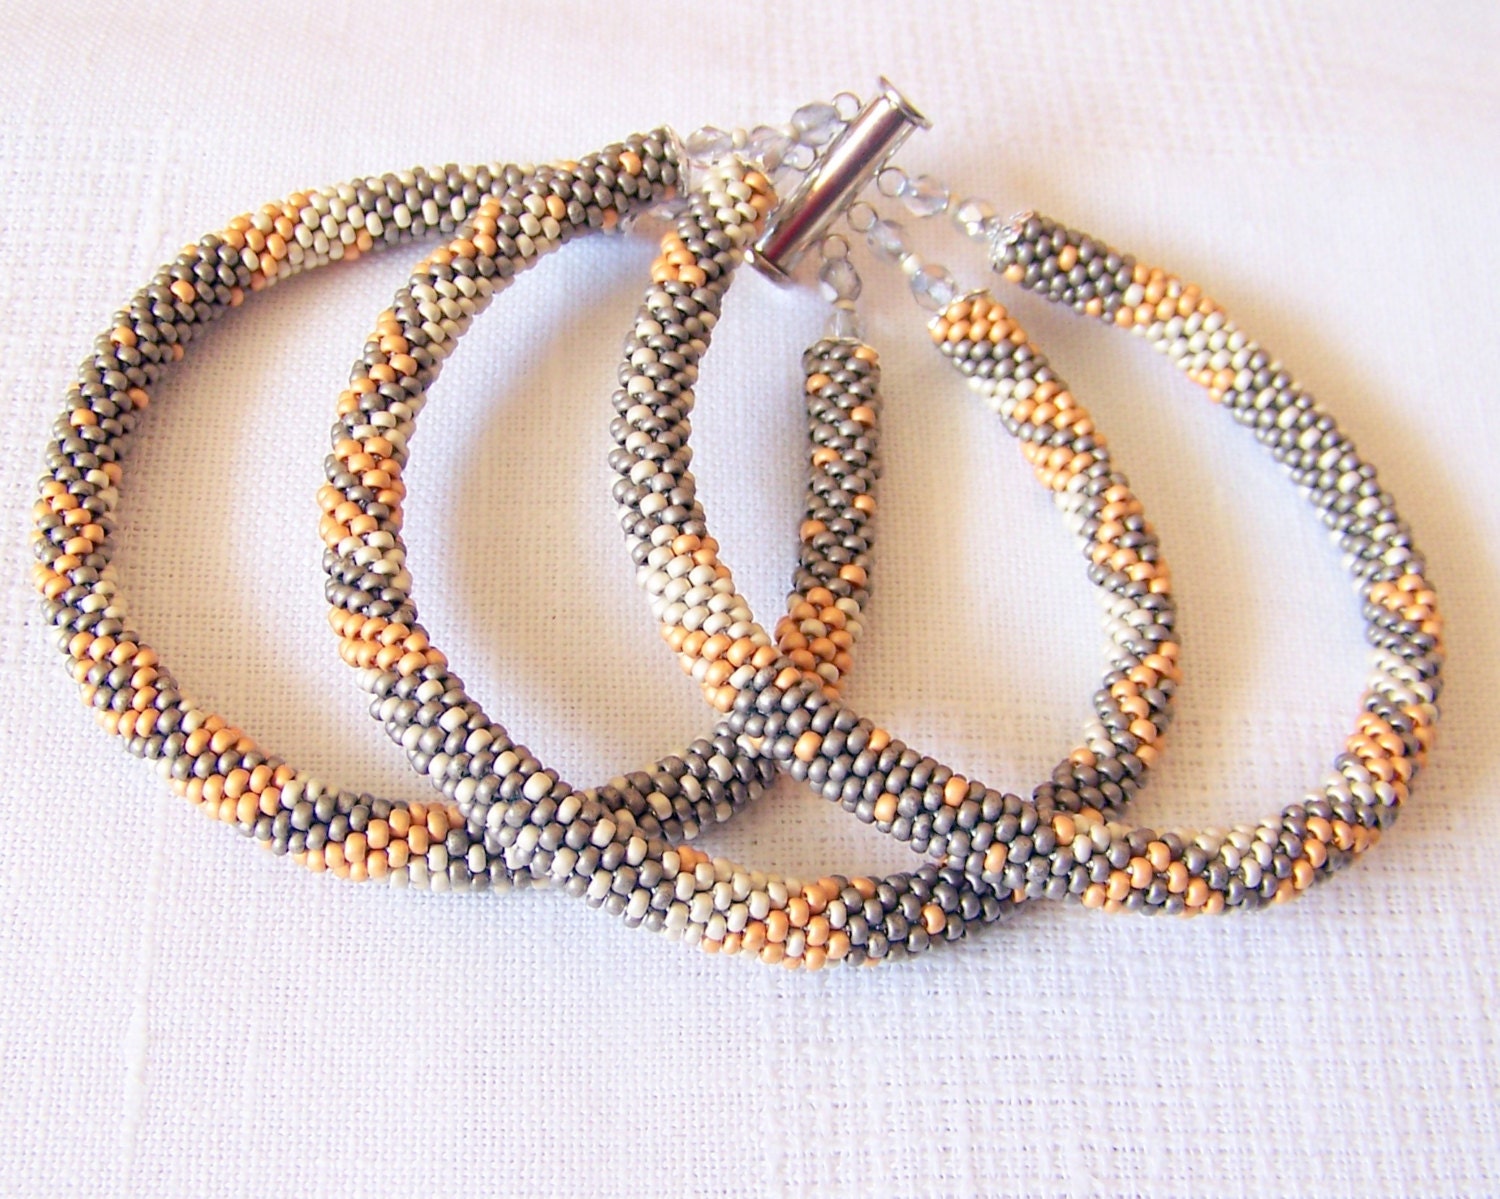 Beadwork 3 Strand Bead Crochet Rope Bracelet in grey silver | Etsy